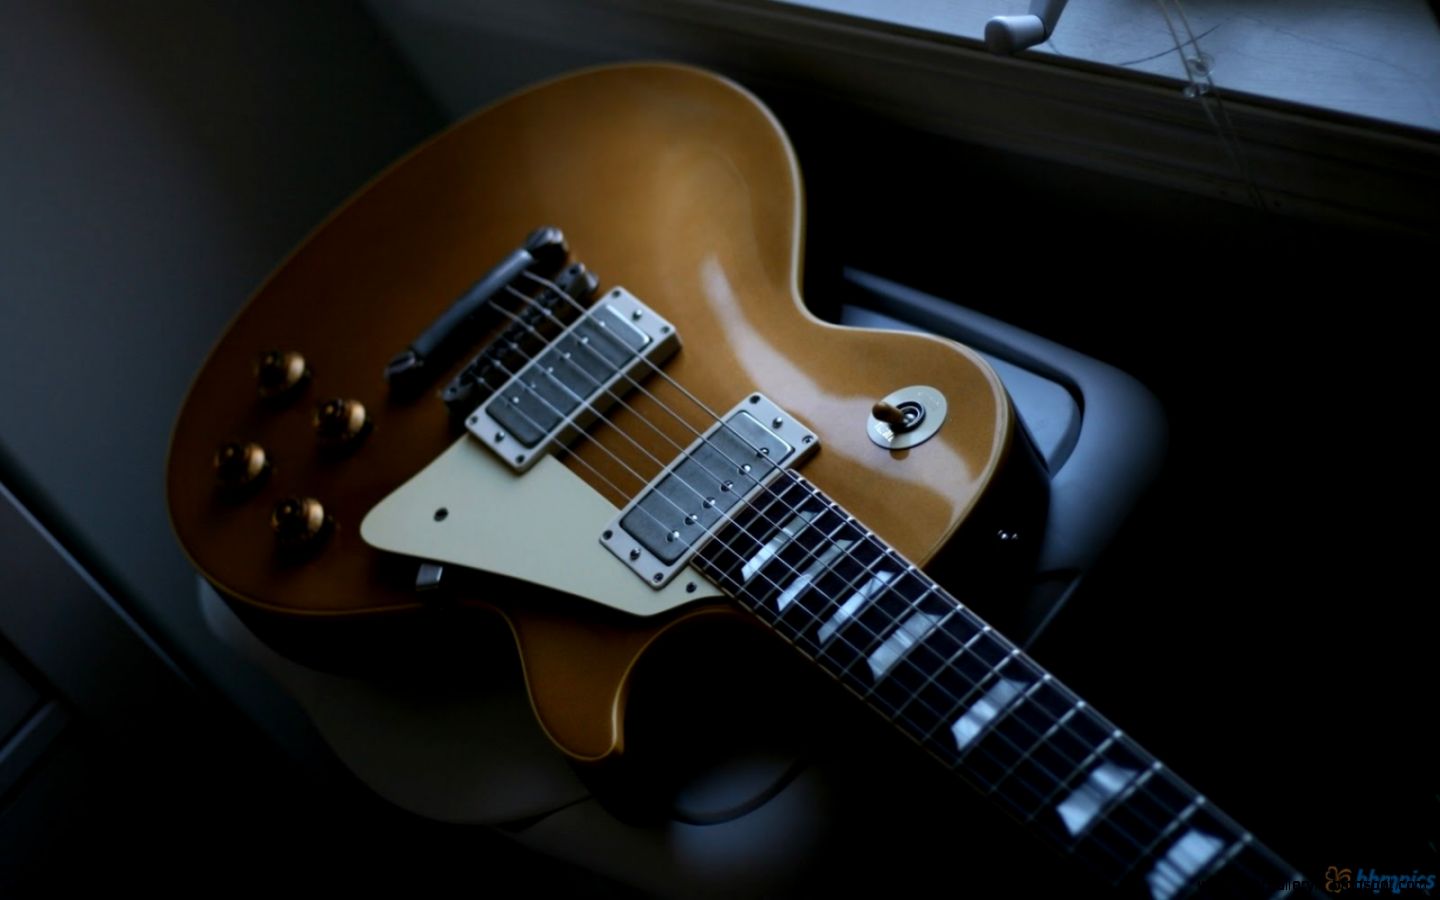 Gibson Guitar Screensaver Download Rottpharind